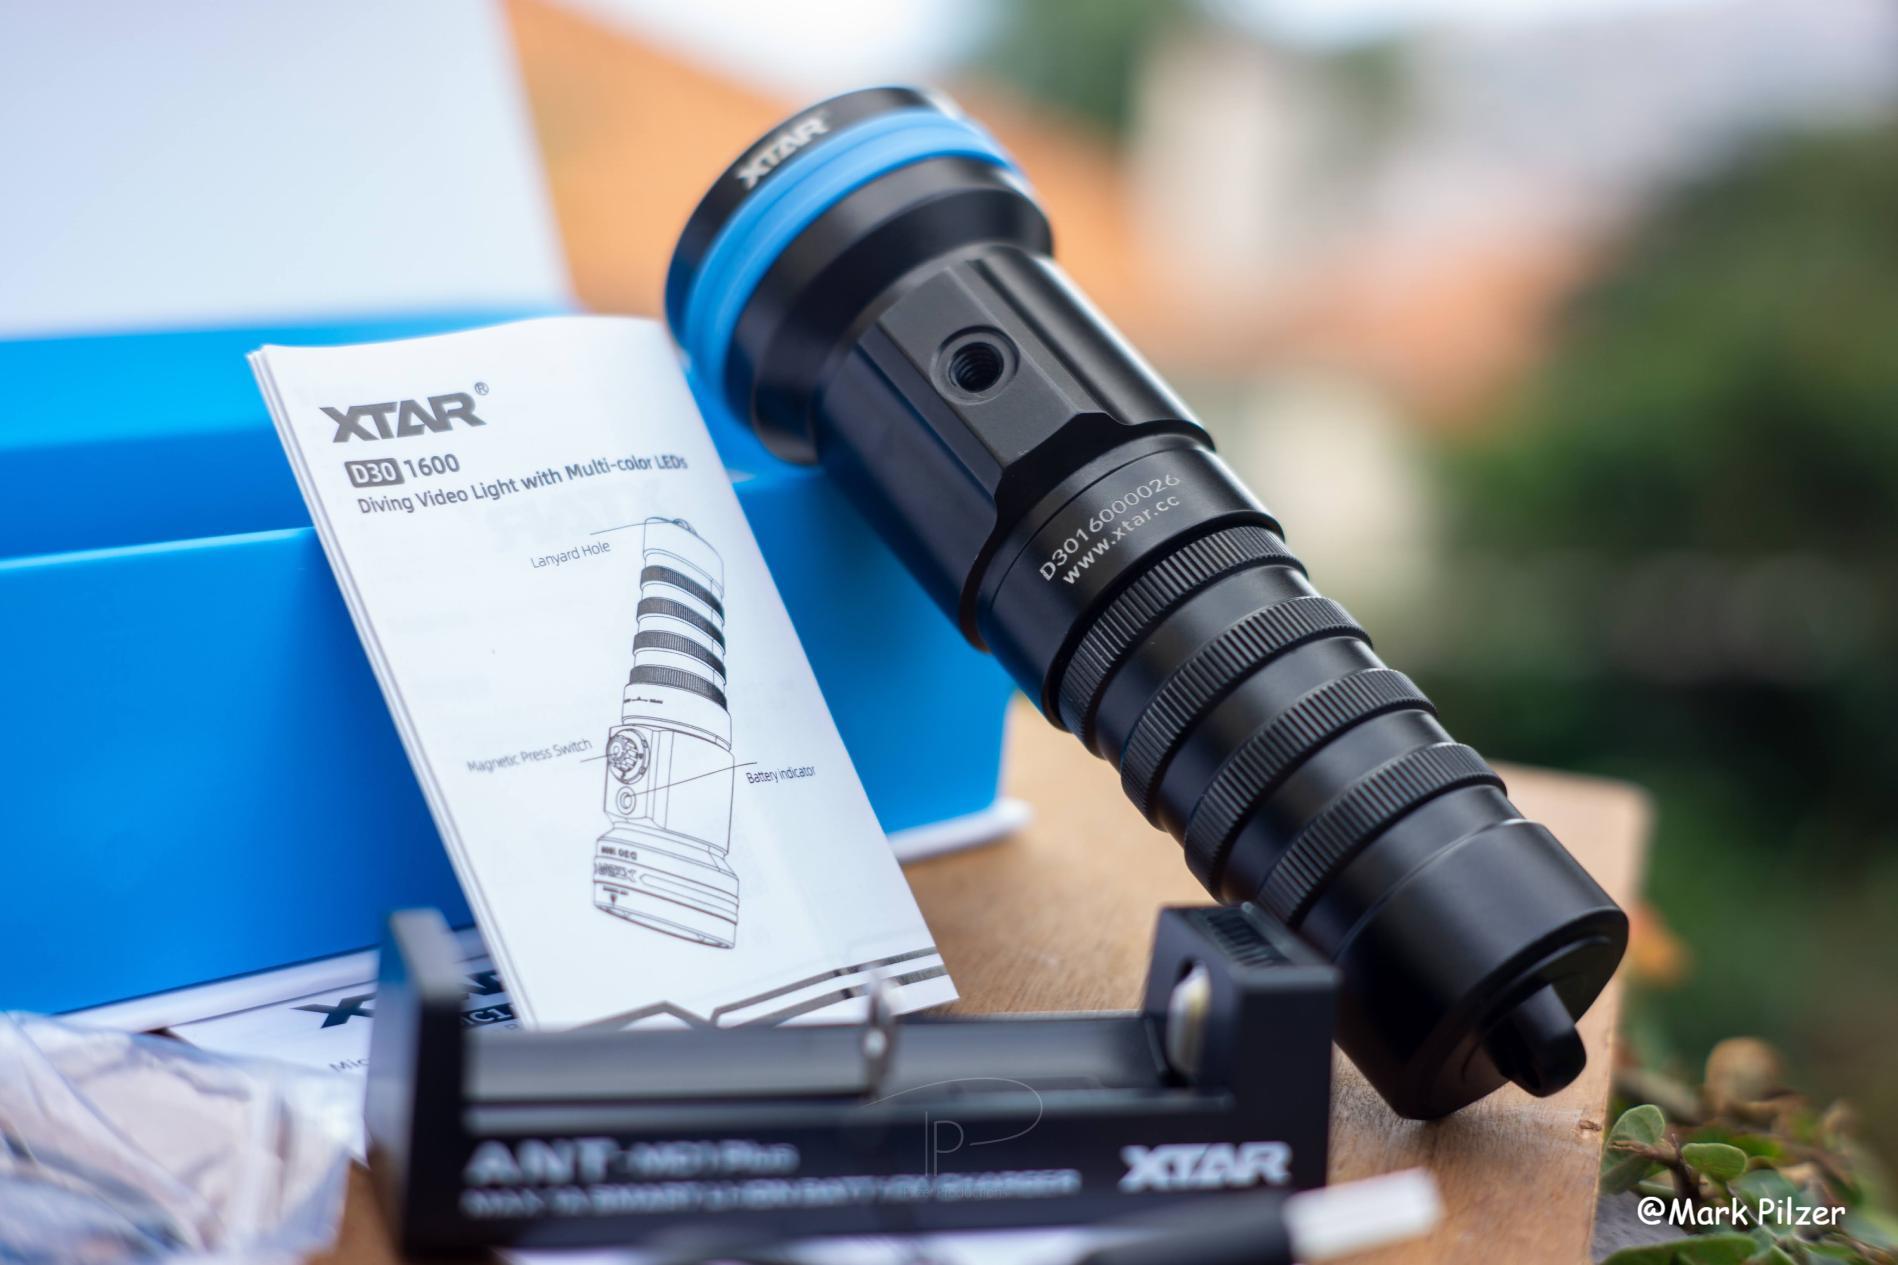 XTAR D30 1600 Dive Light can be mounted on goodman handles and camera balls